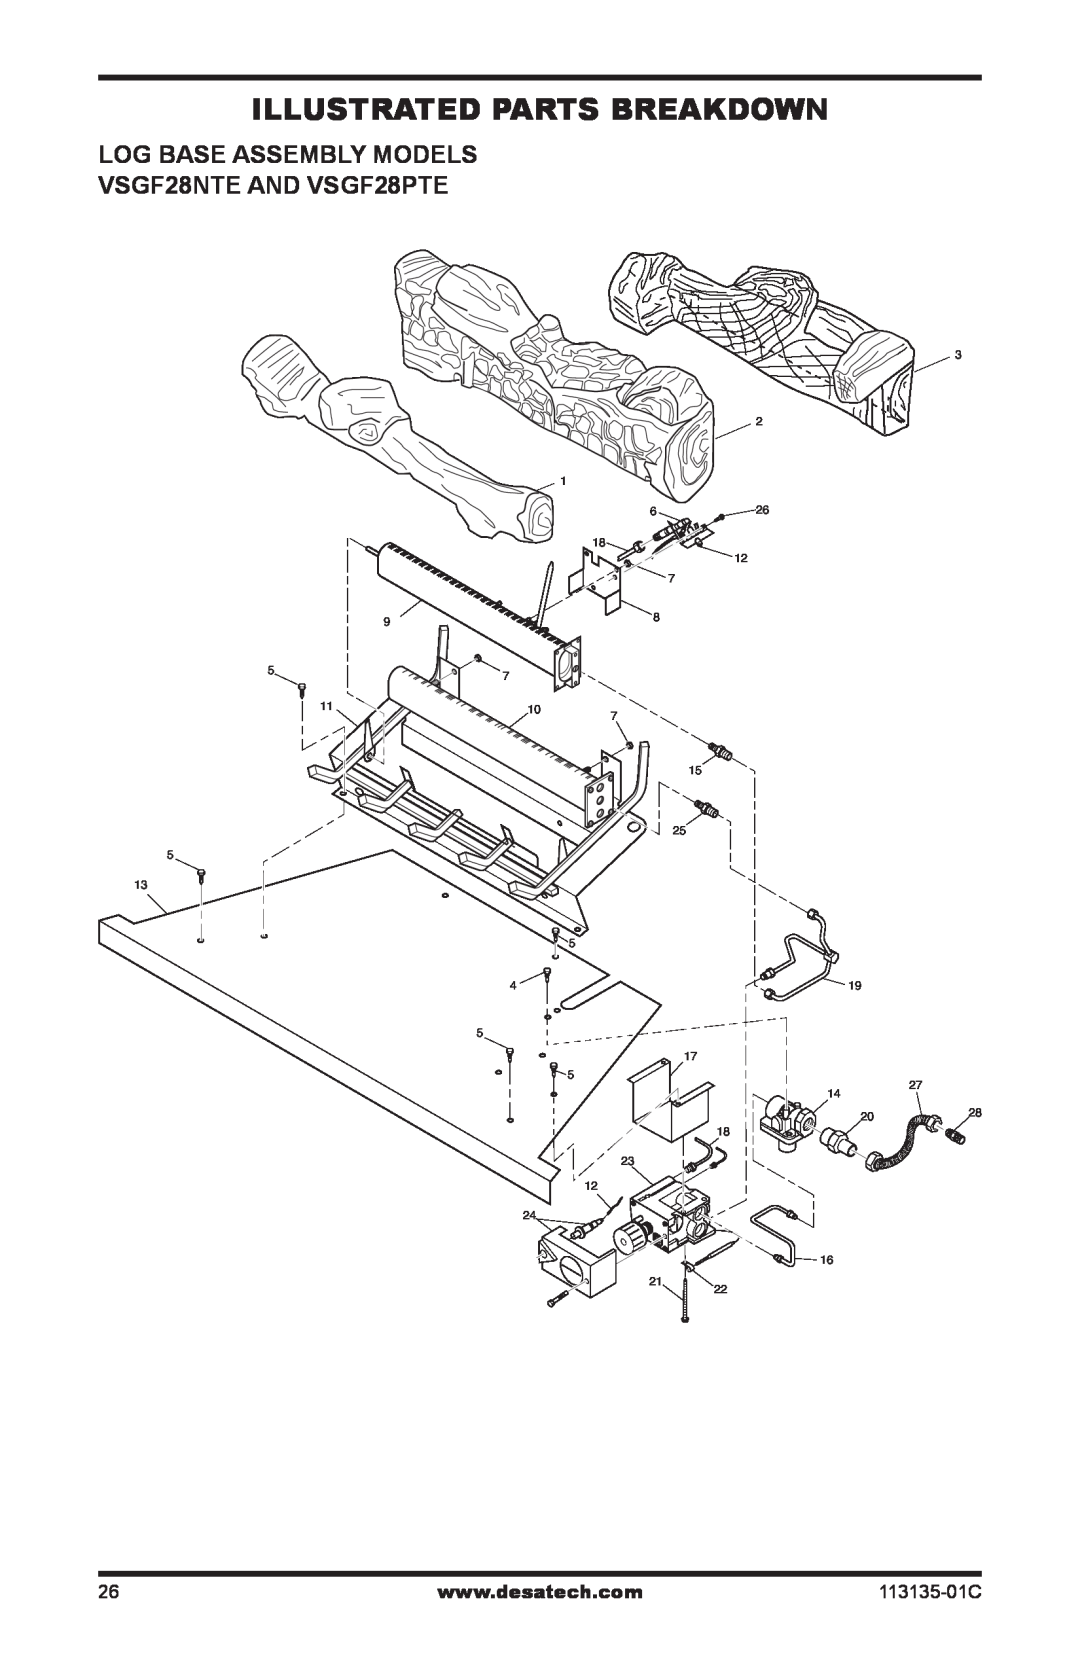 Vanguard Heating VSGF-28PTE Illustrated Parts Breakdown, LOG BASE ASSEMBLY MODELS VSGF28NTE AND VSGF28PTE, 113135-01C 